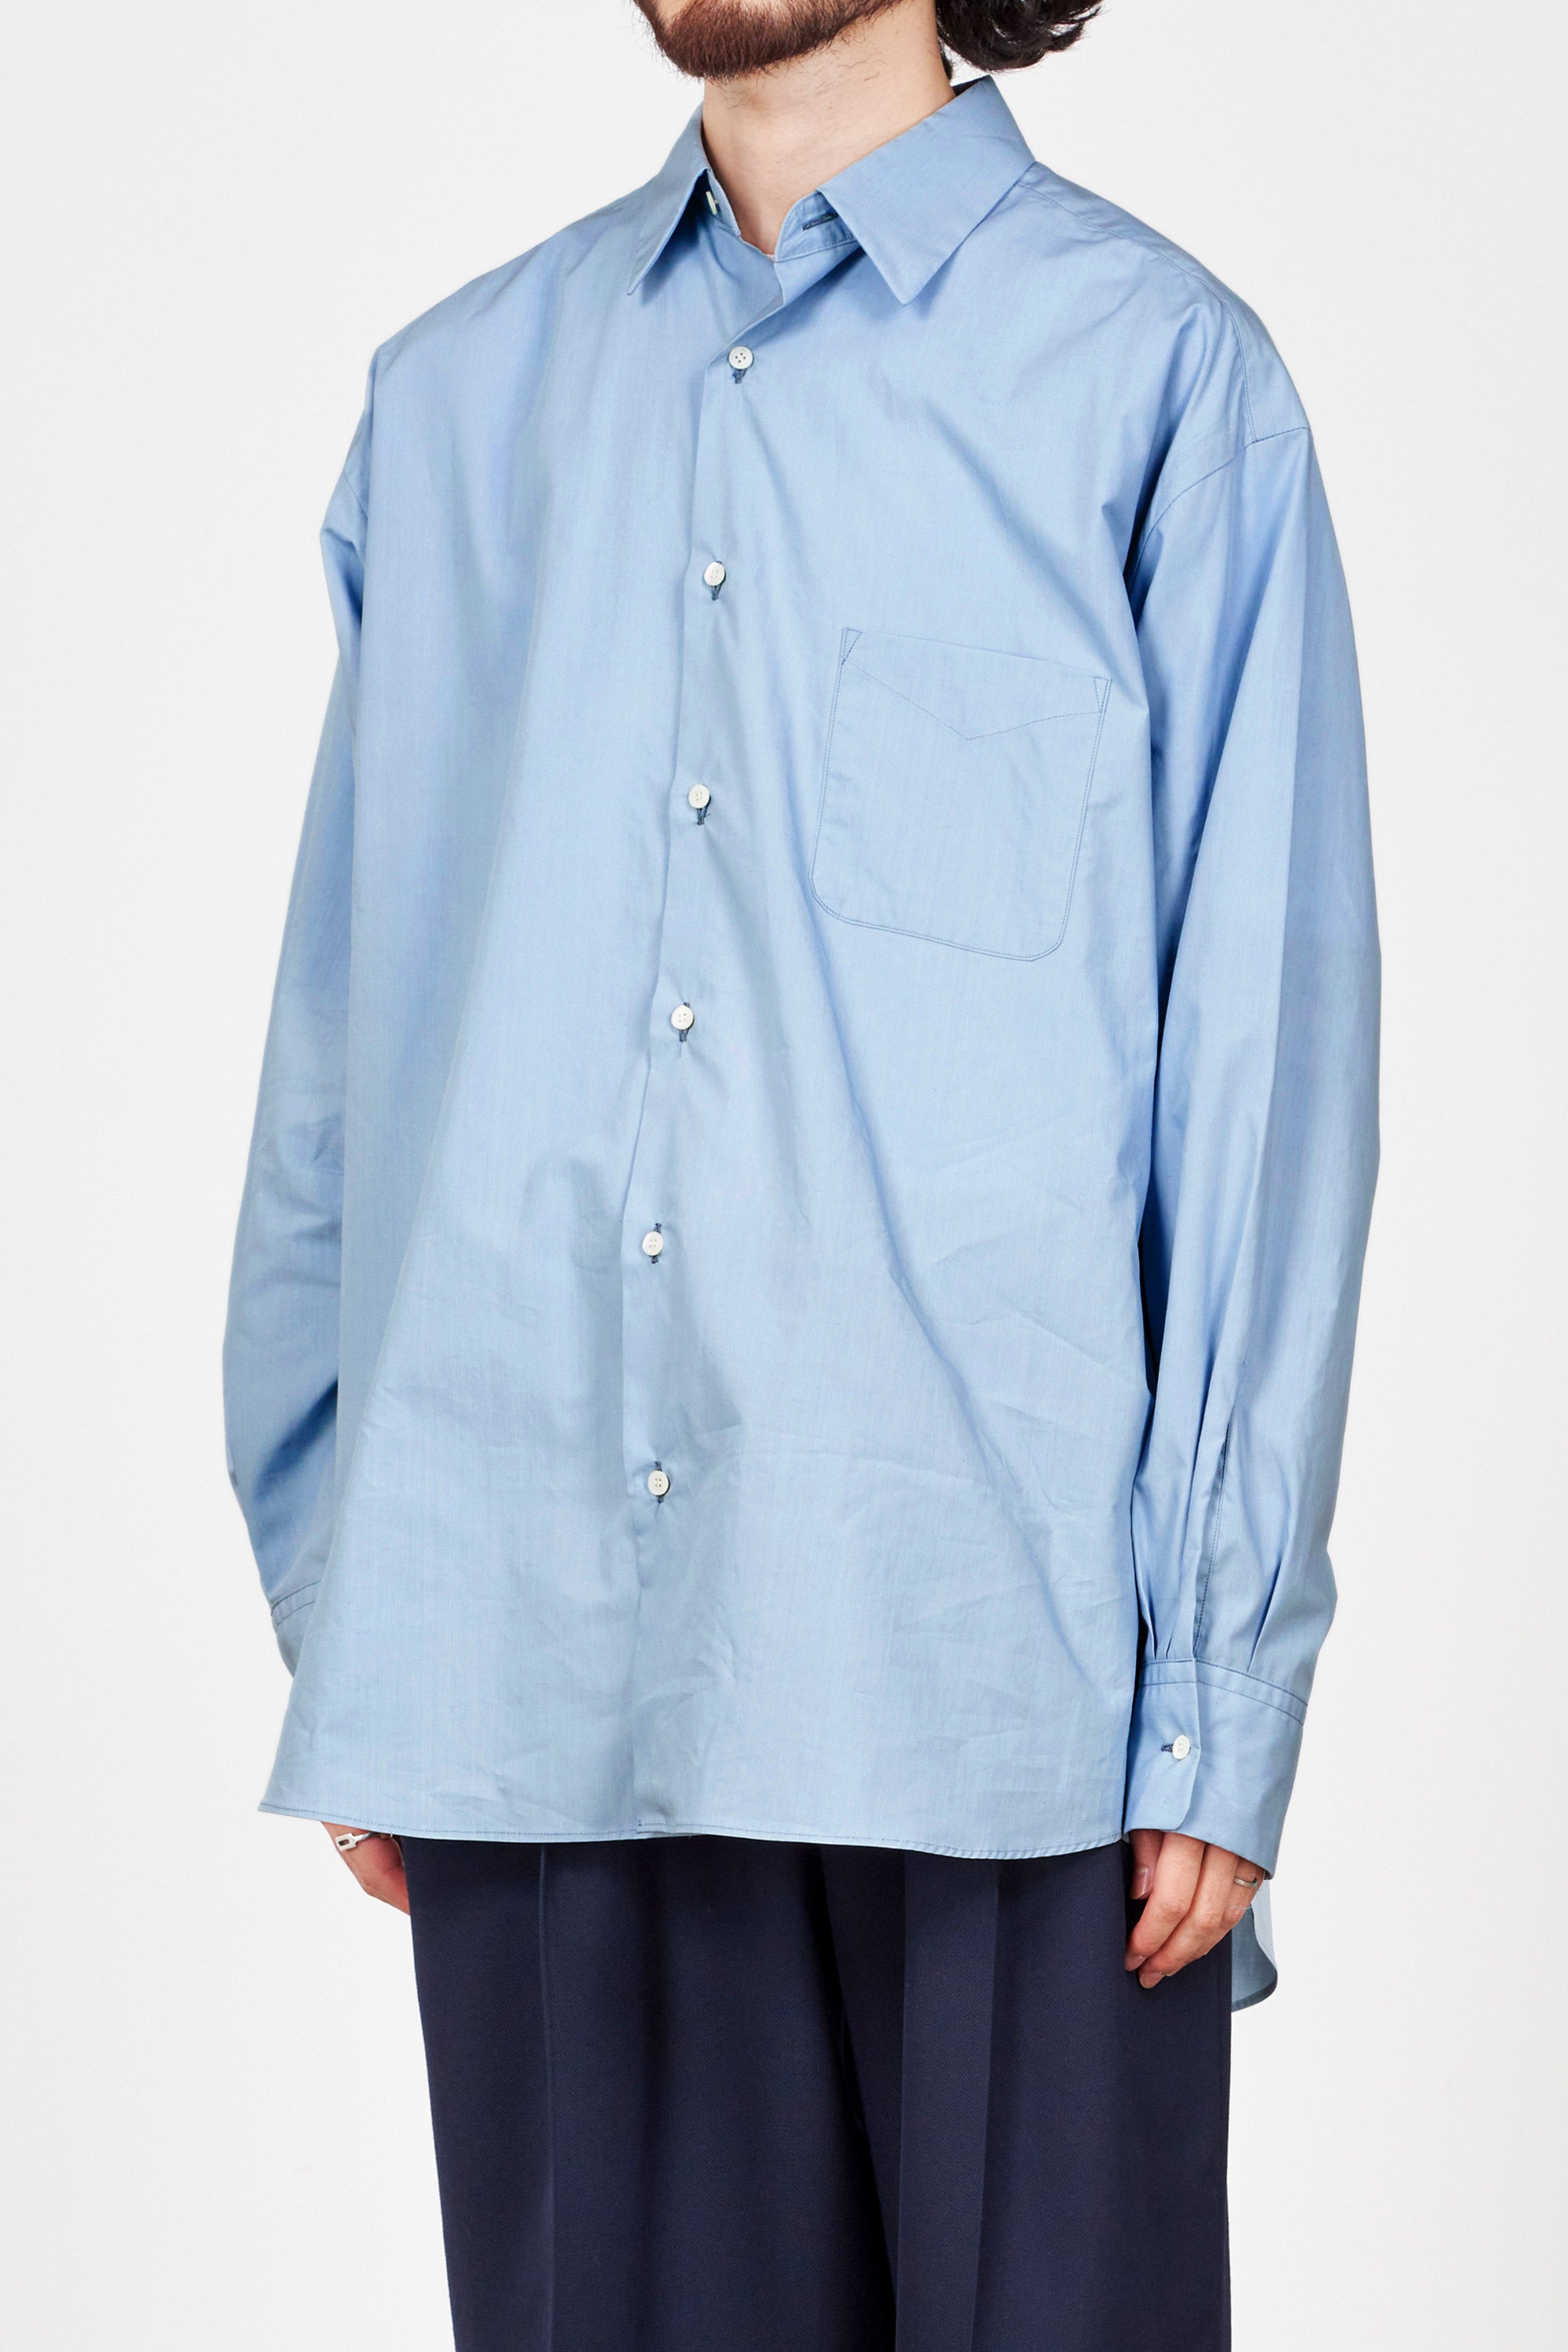 MARKAWARE コンフォートフィットシャツ, Saxe Blue袖丈長袖